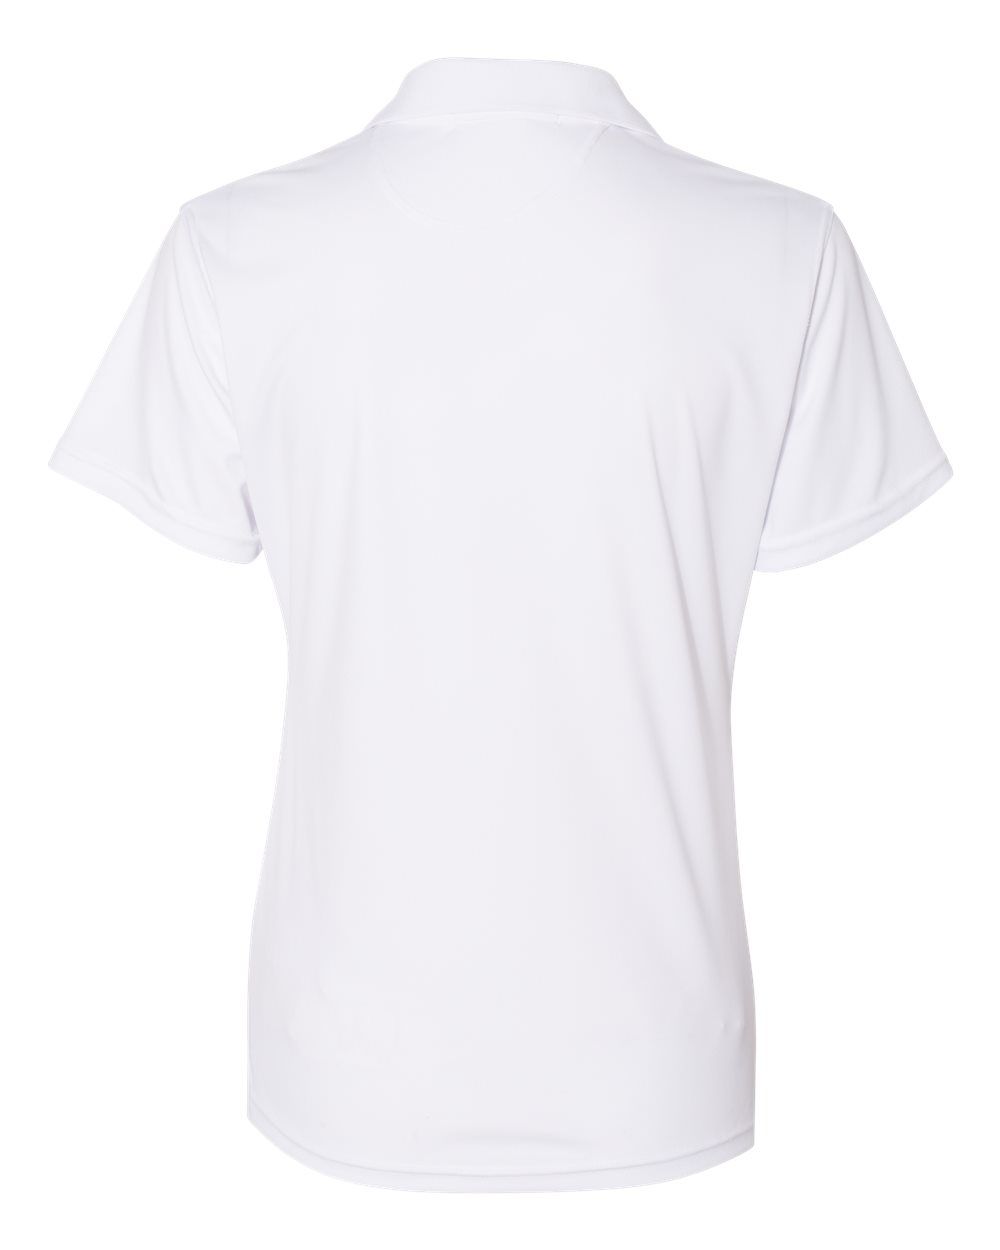 'FeatherLite 5100 Women's Value Polyester Sport Shirt'